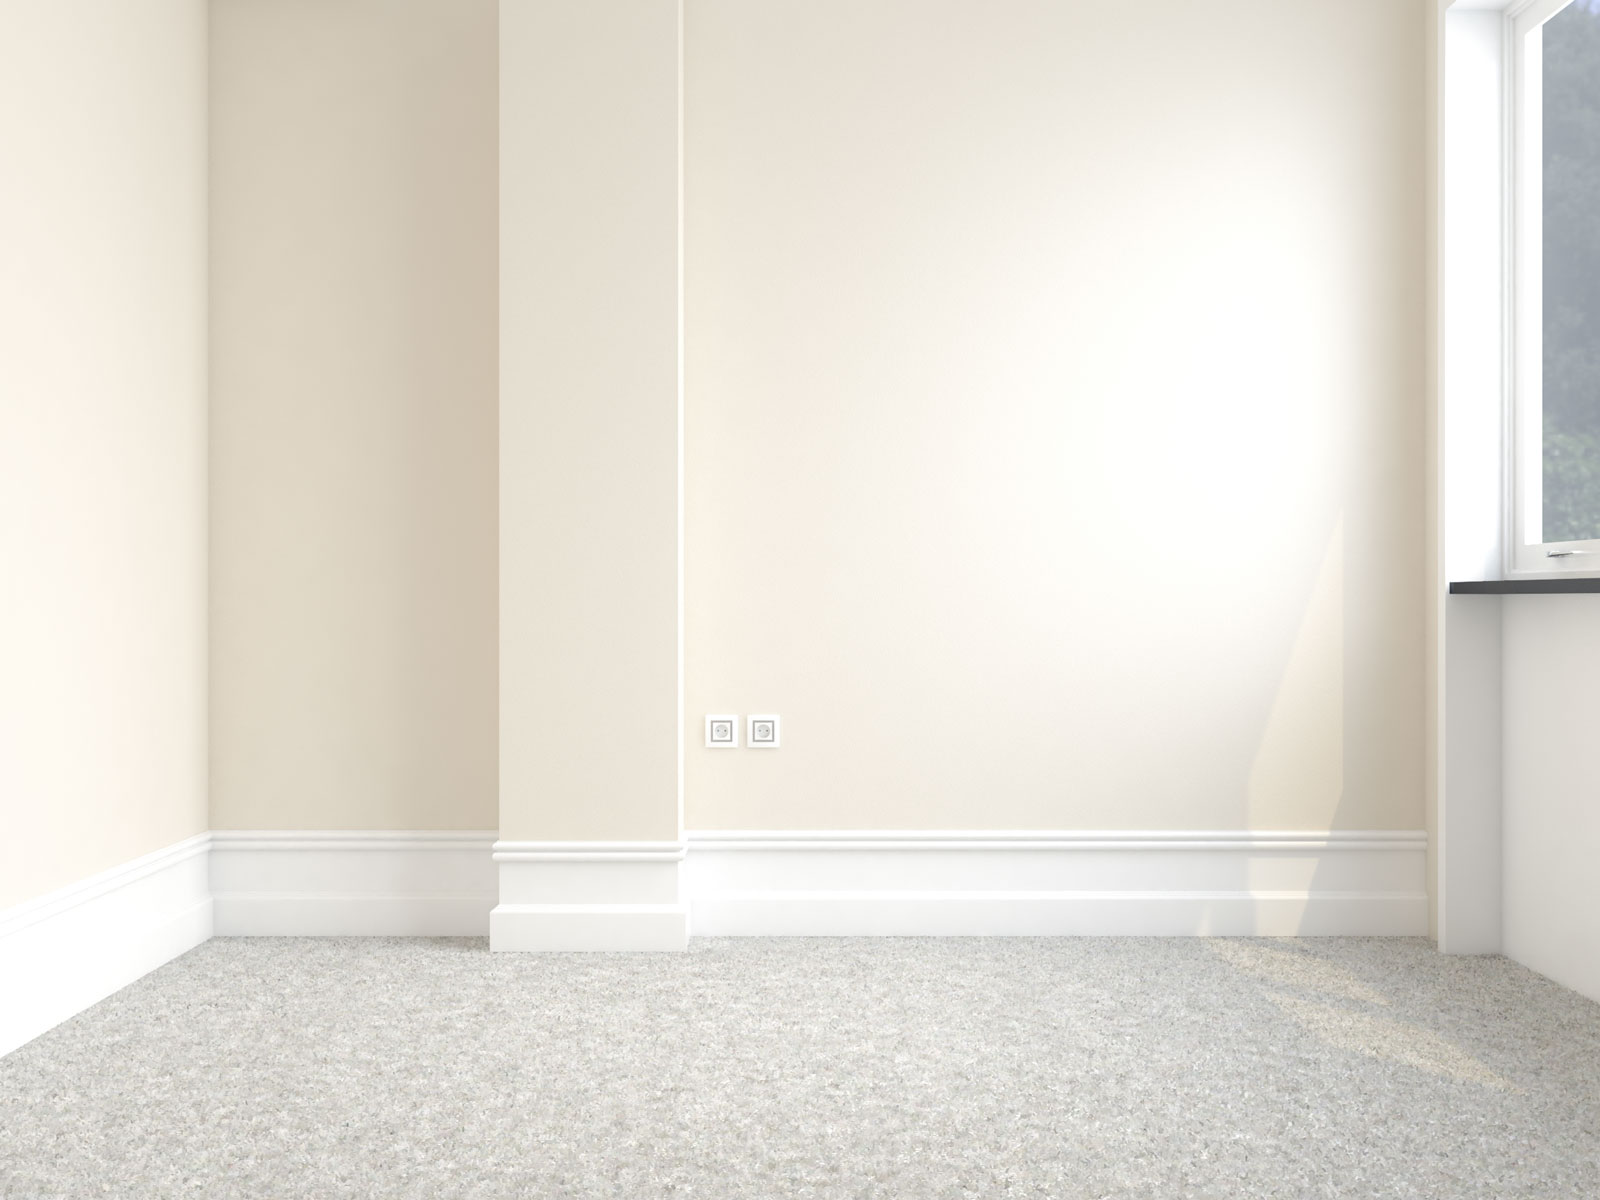 Beige walls with cream carpet floors